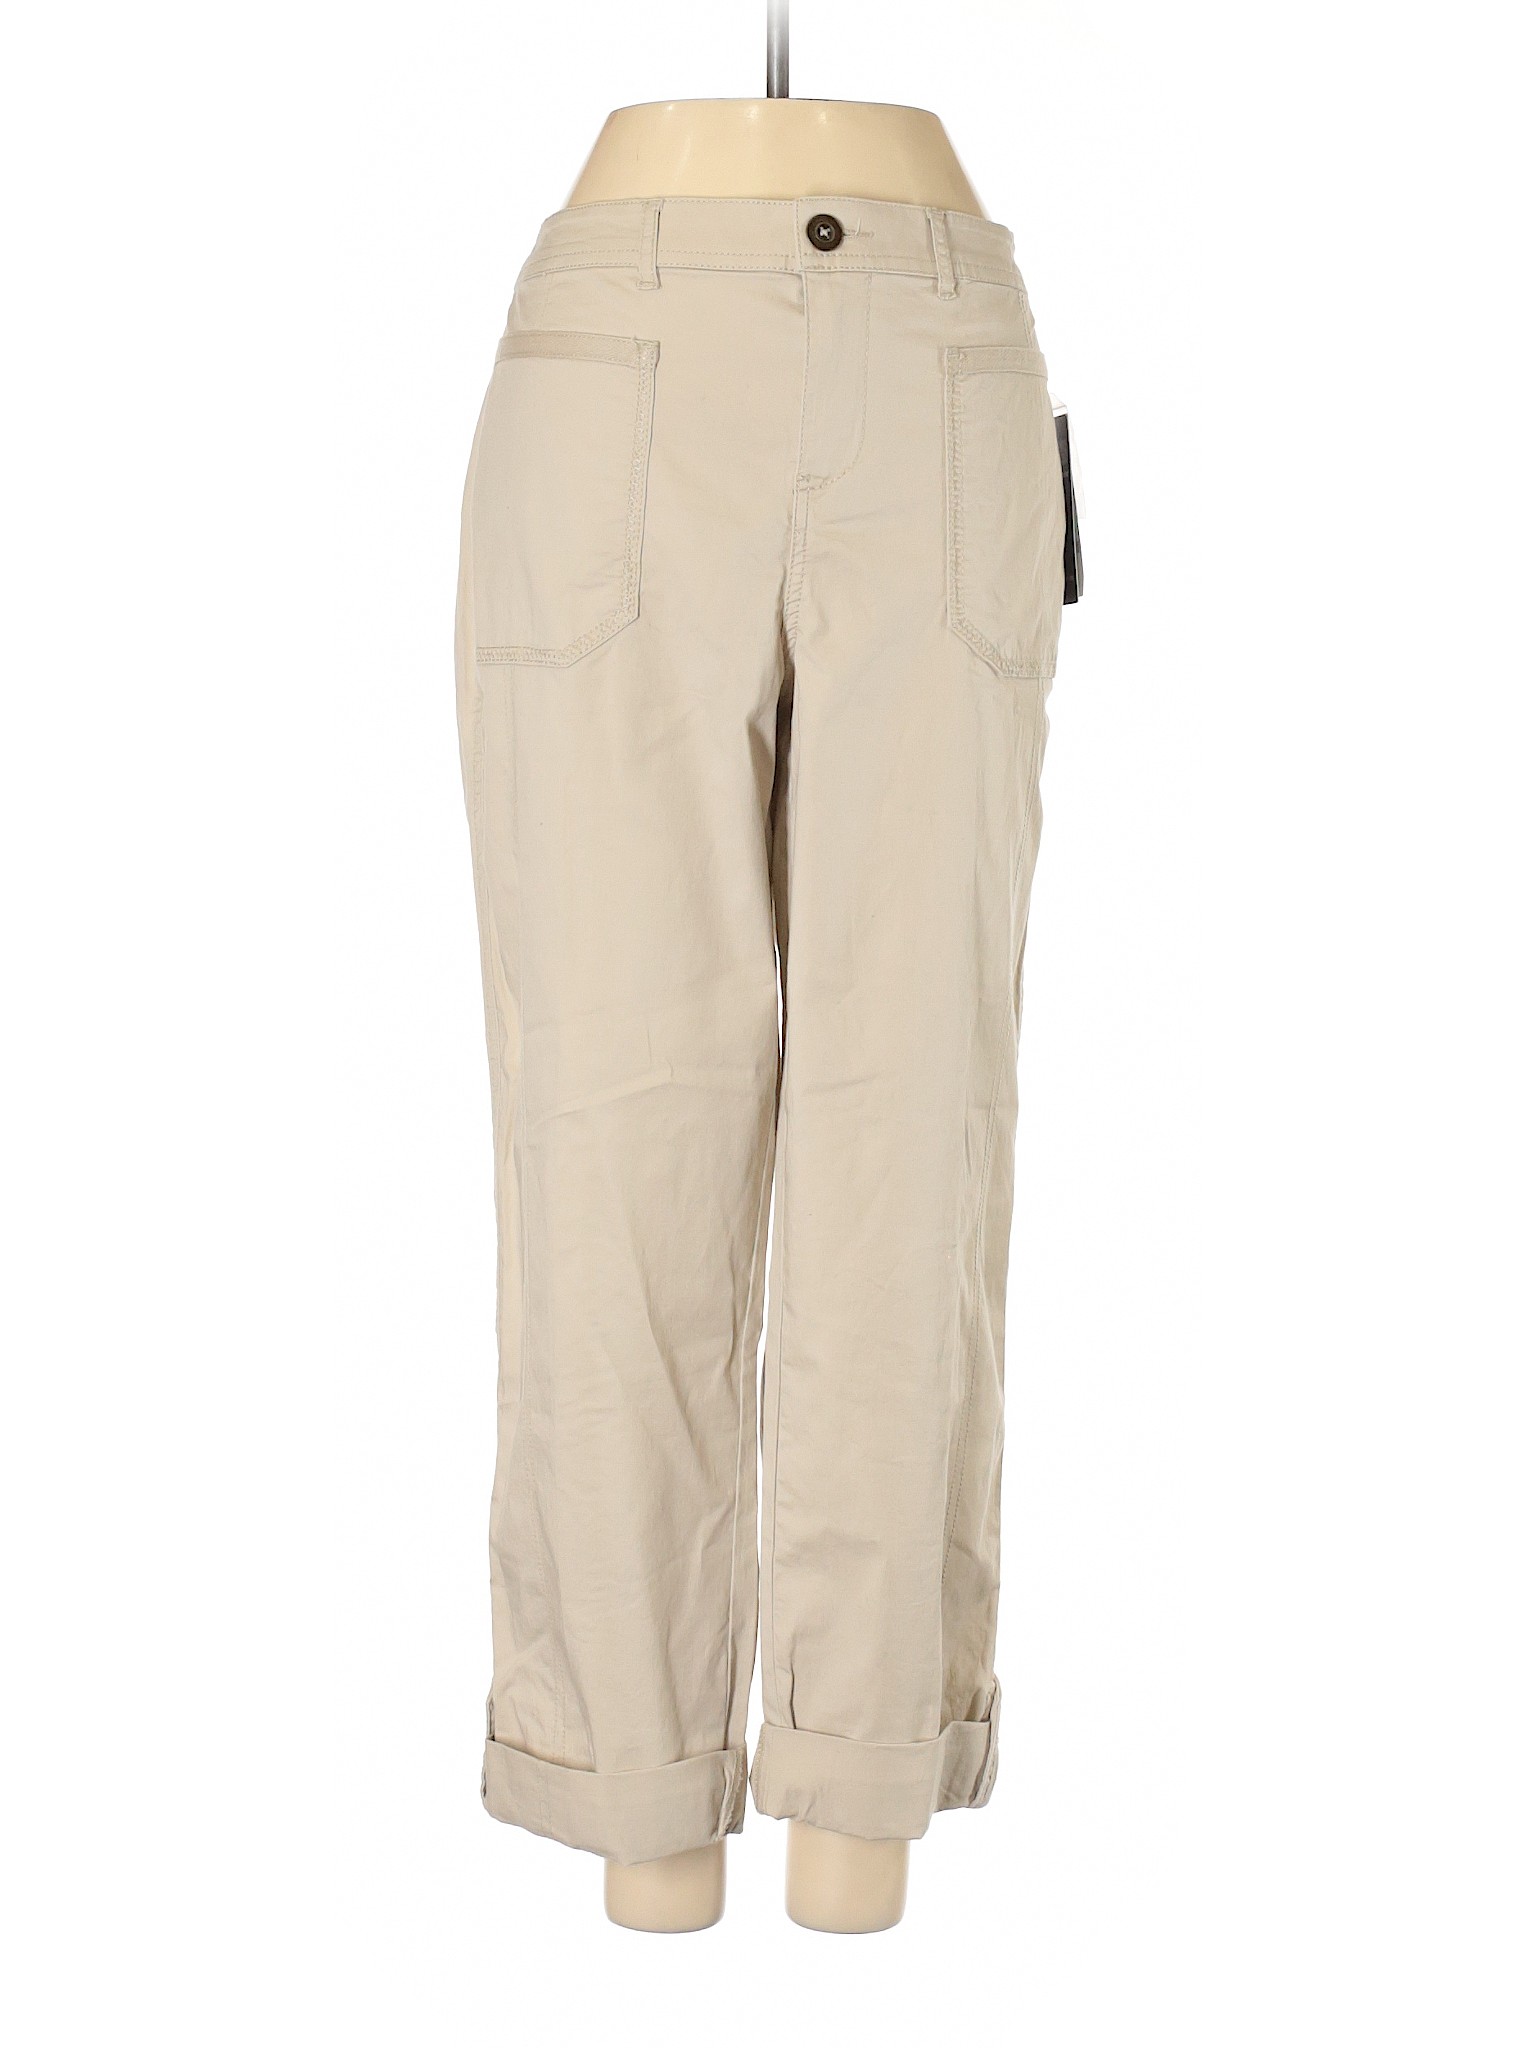 NWT Style&Co Women Brown Khakis 8 | eBay